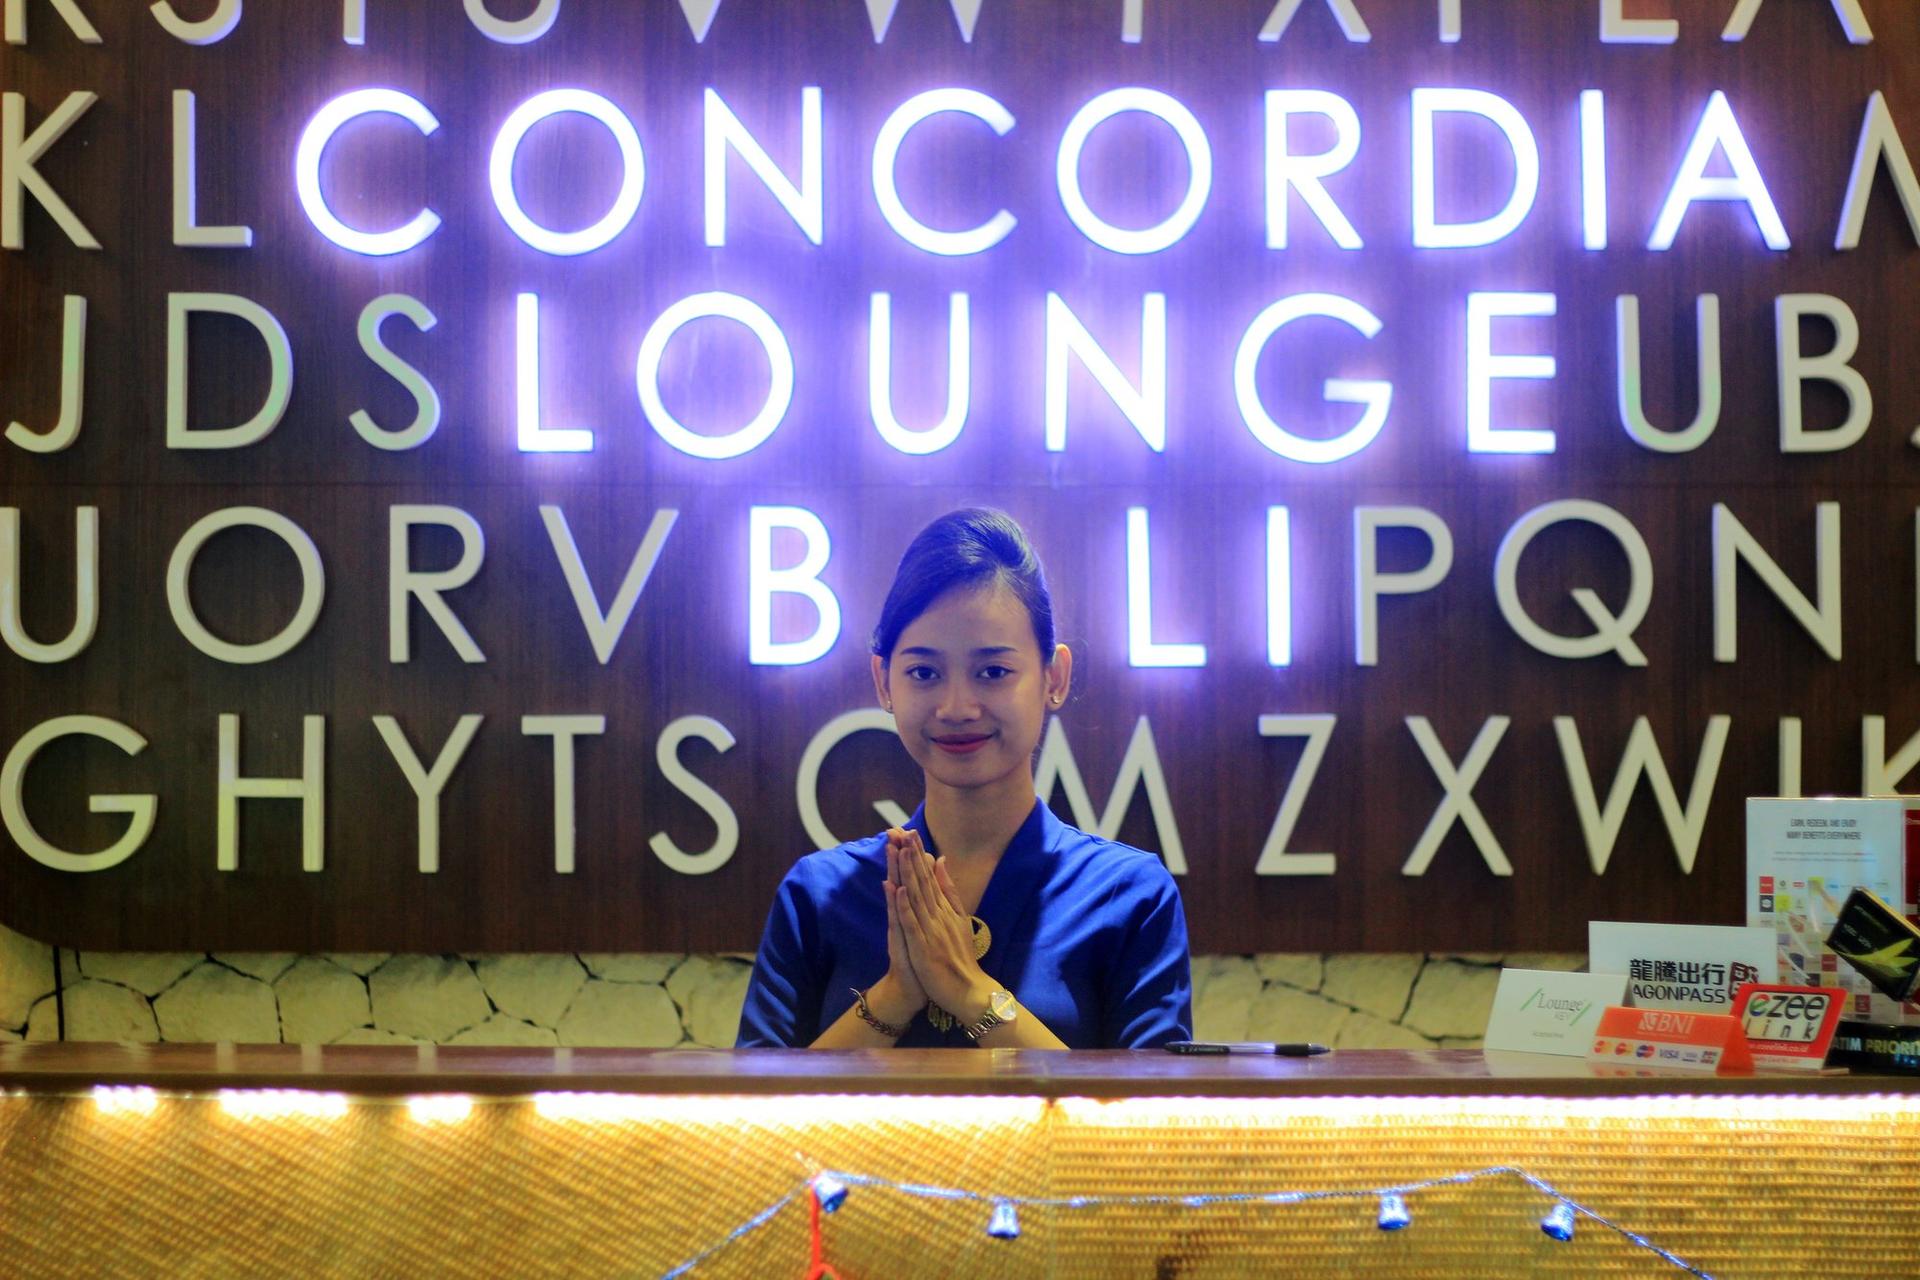 Concordia Lounge image 27 of 34